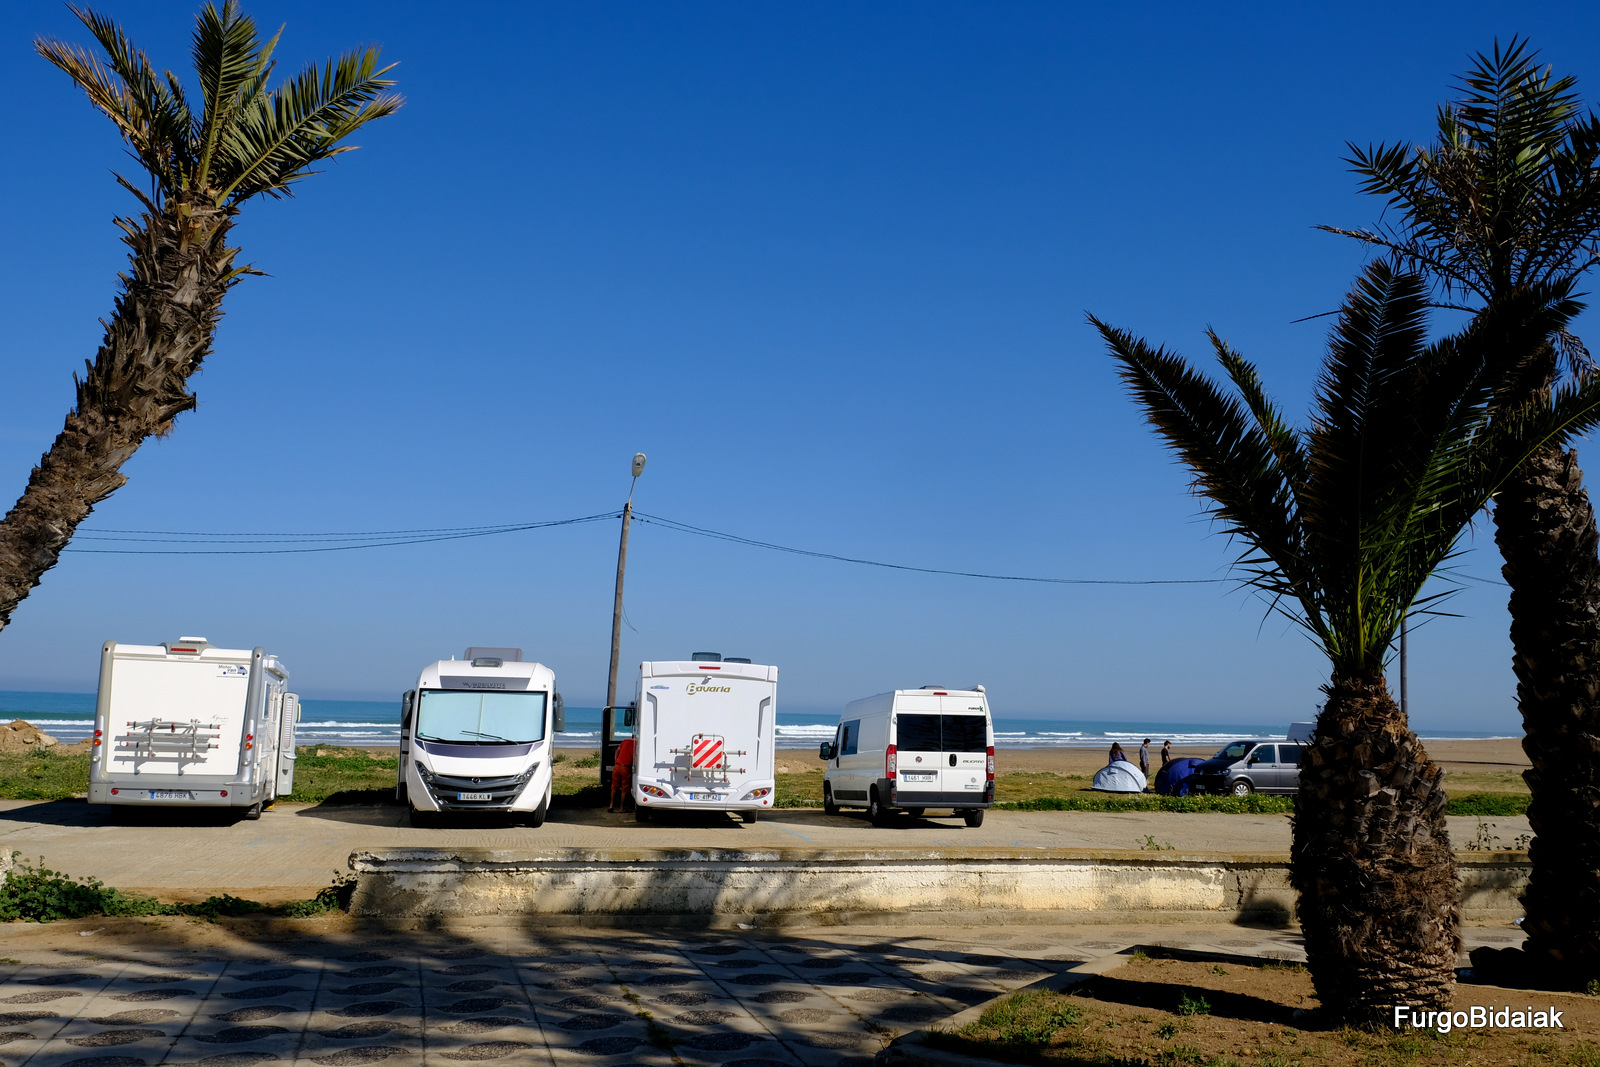 costa Atlántica de Marruecos en furgoneta camper, furgobidaiak